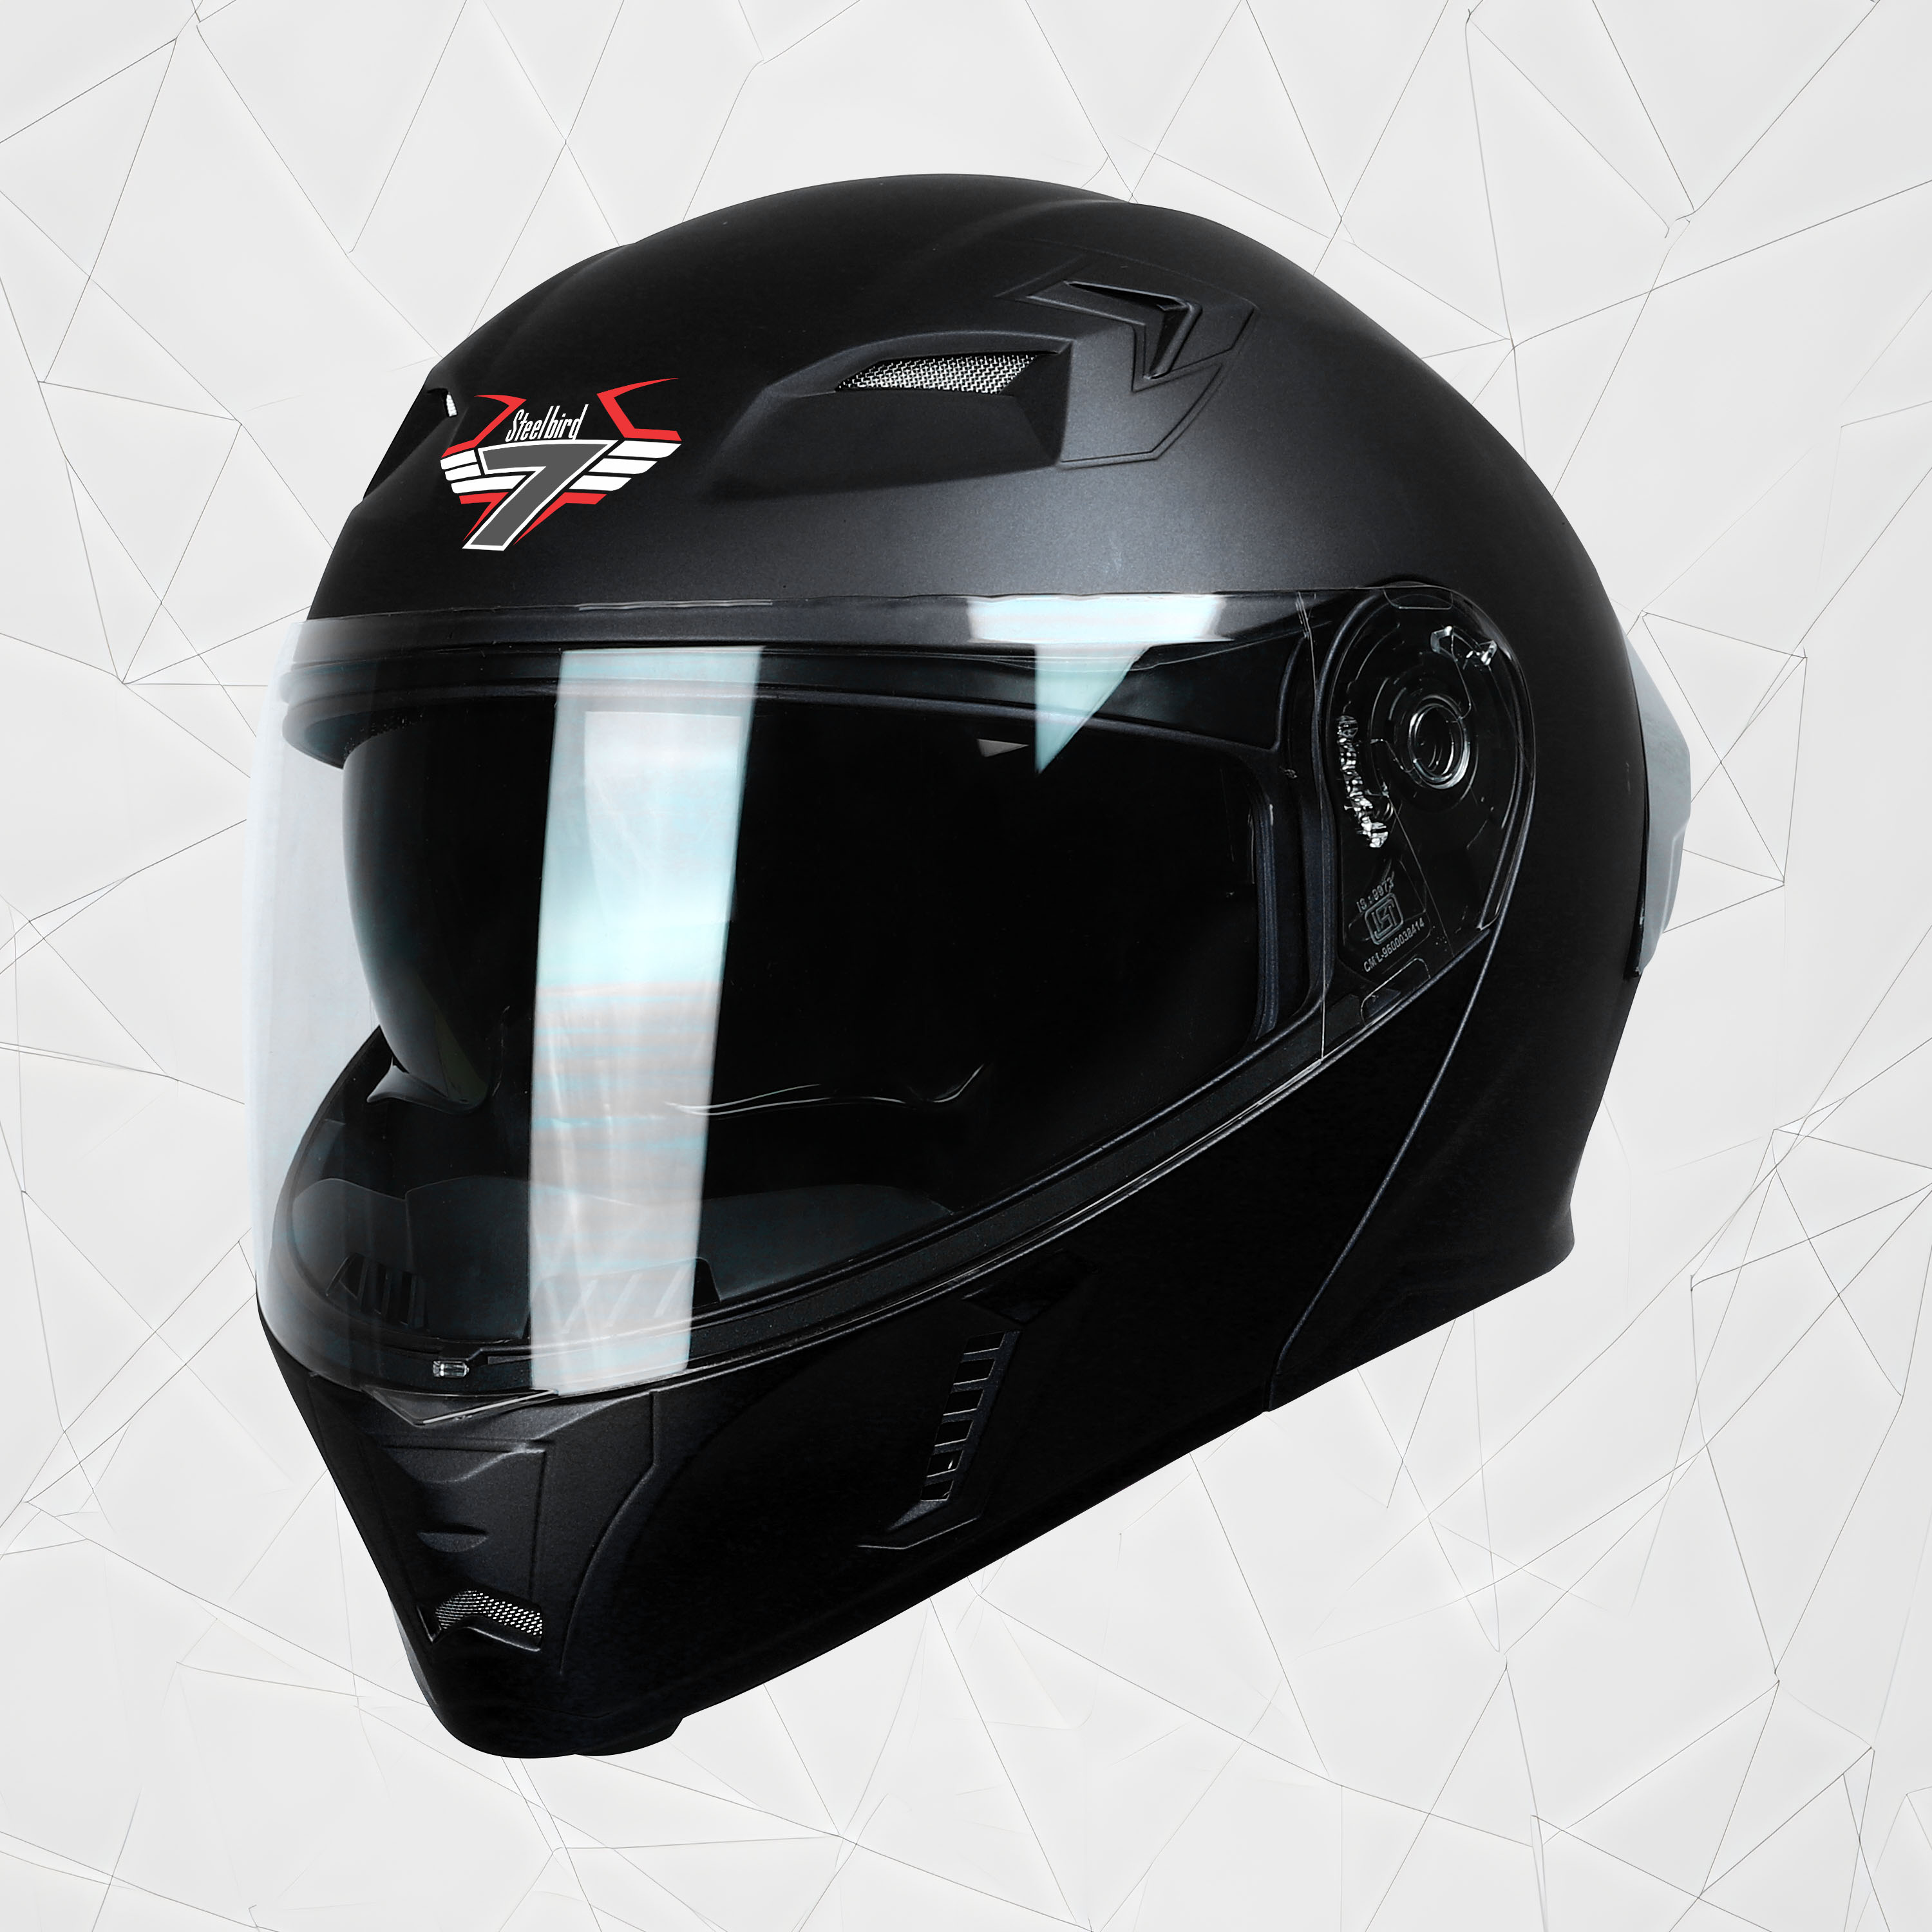 Steelbird SBA-20 7Wings ISI Certified Flip-Up Helmet With Black Spoiler For Men And Women With Inner Smoke Sun Shield (Matt Black)